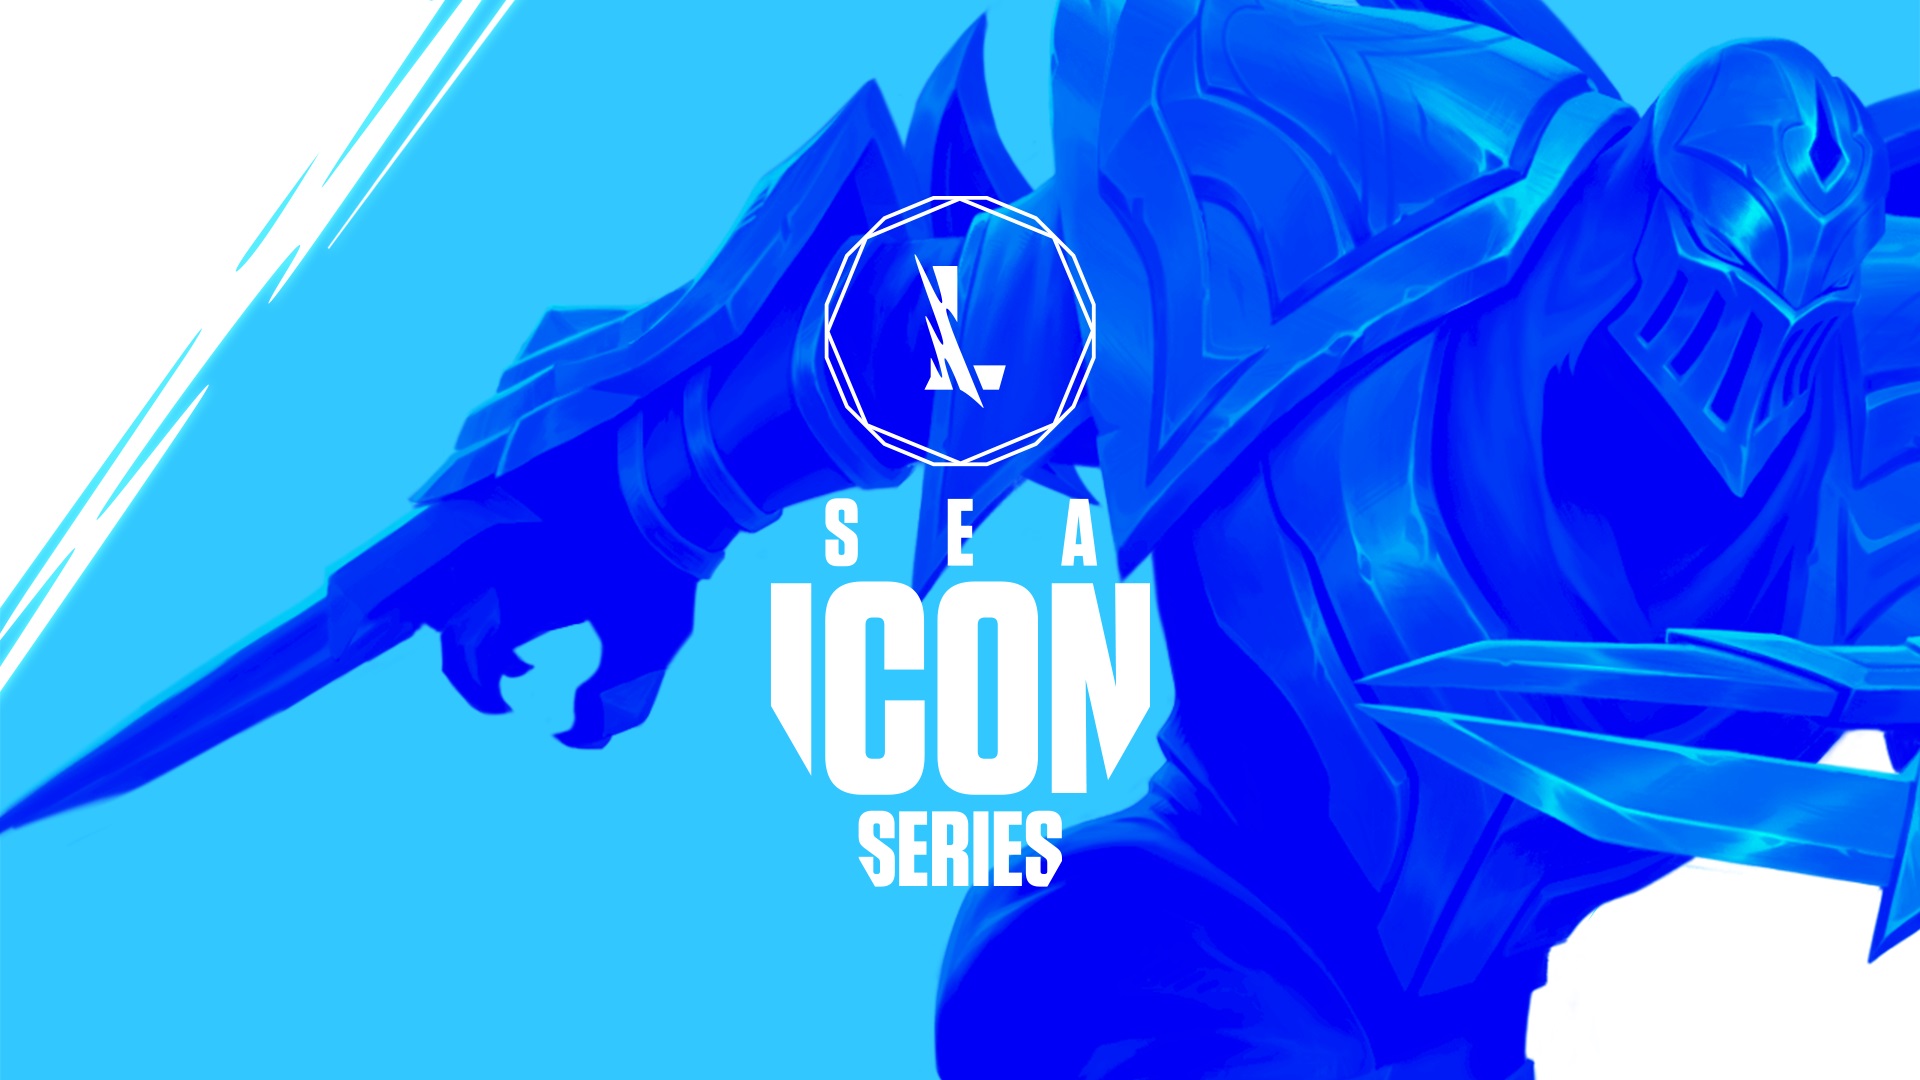 Jadwal Lengkap dan Link Live Streaming SEA Icon Series ID Pramusim:  Kompetisi Perdana Wild Rift